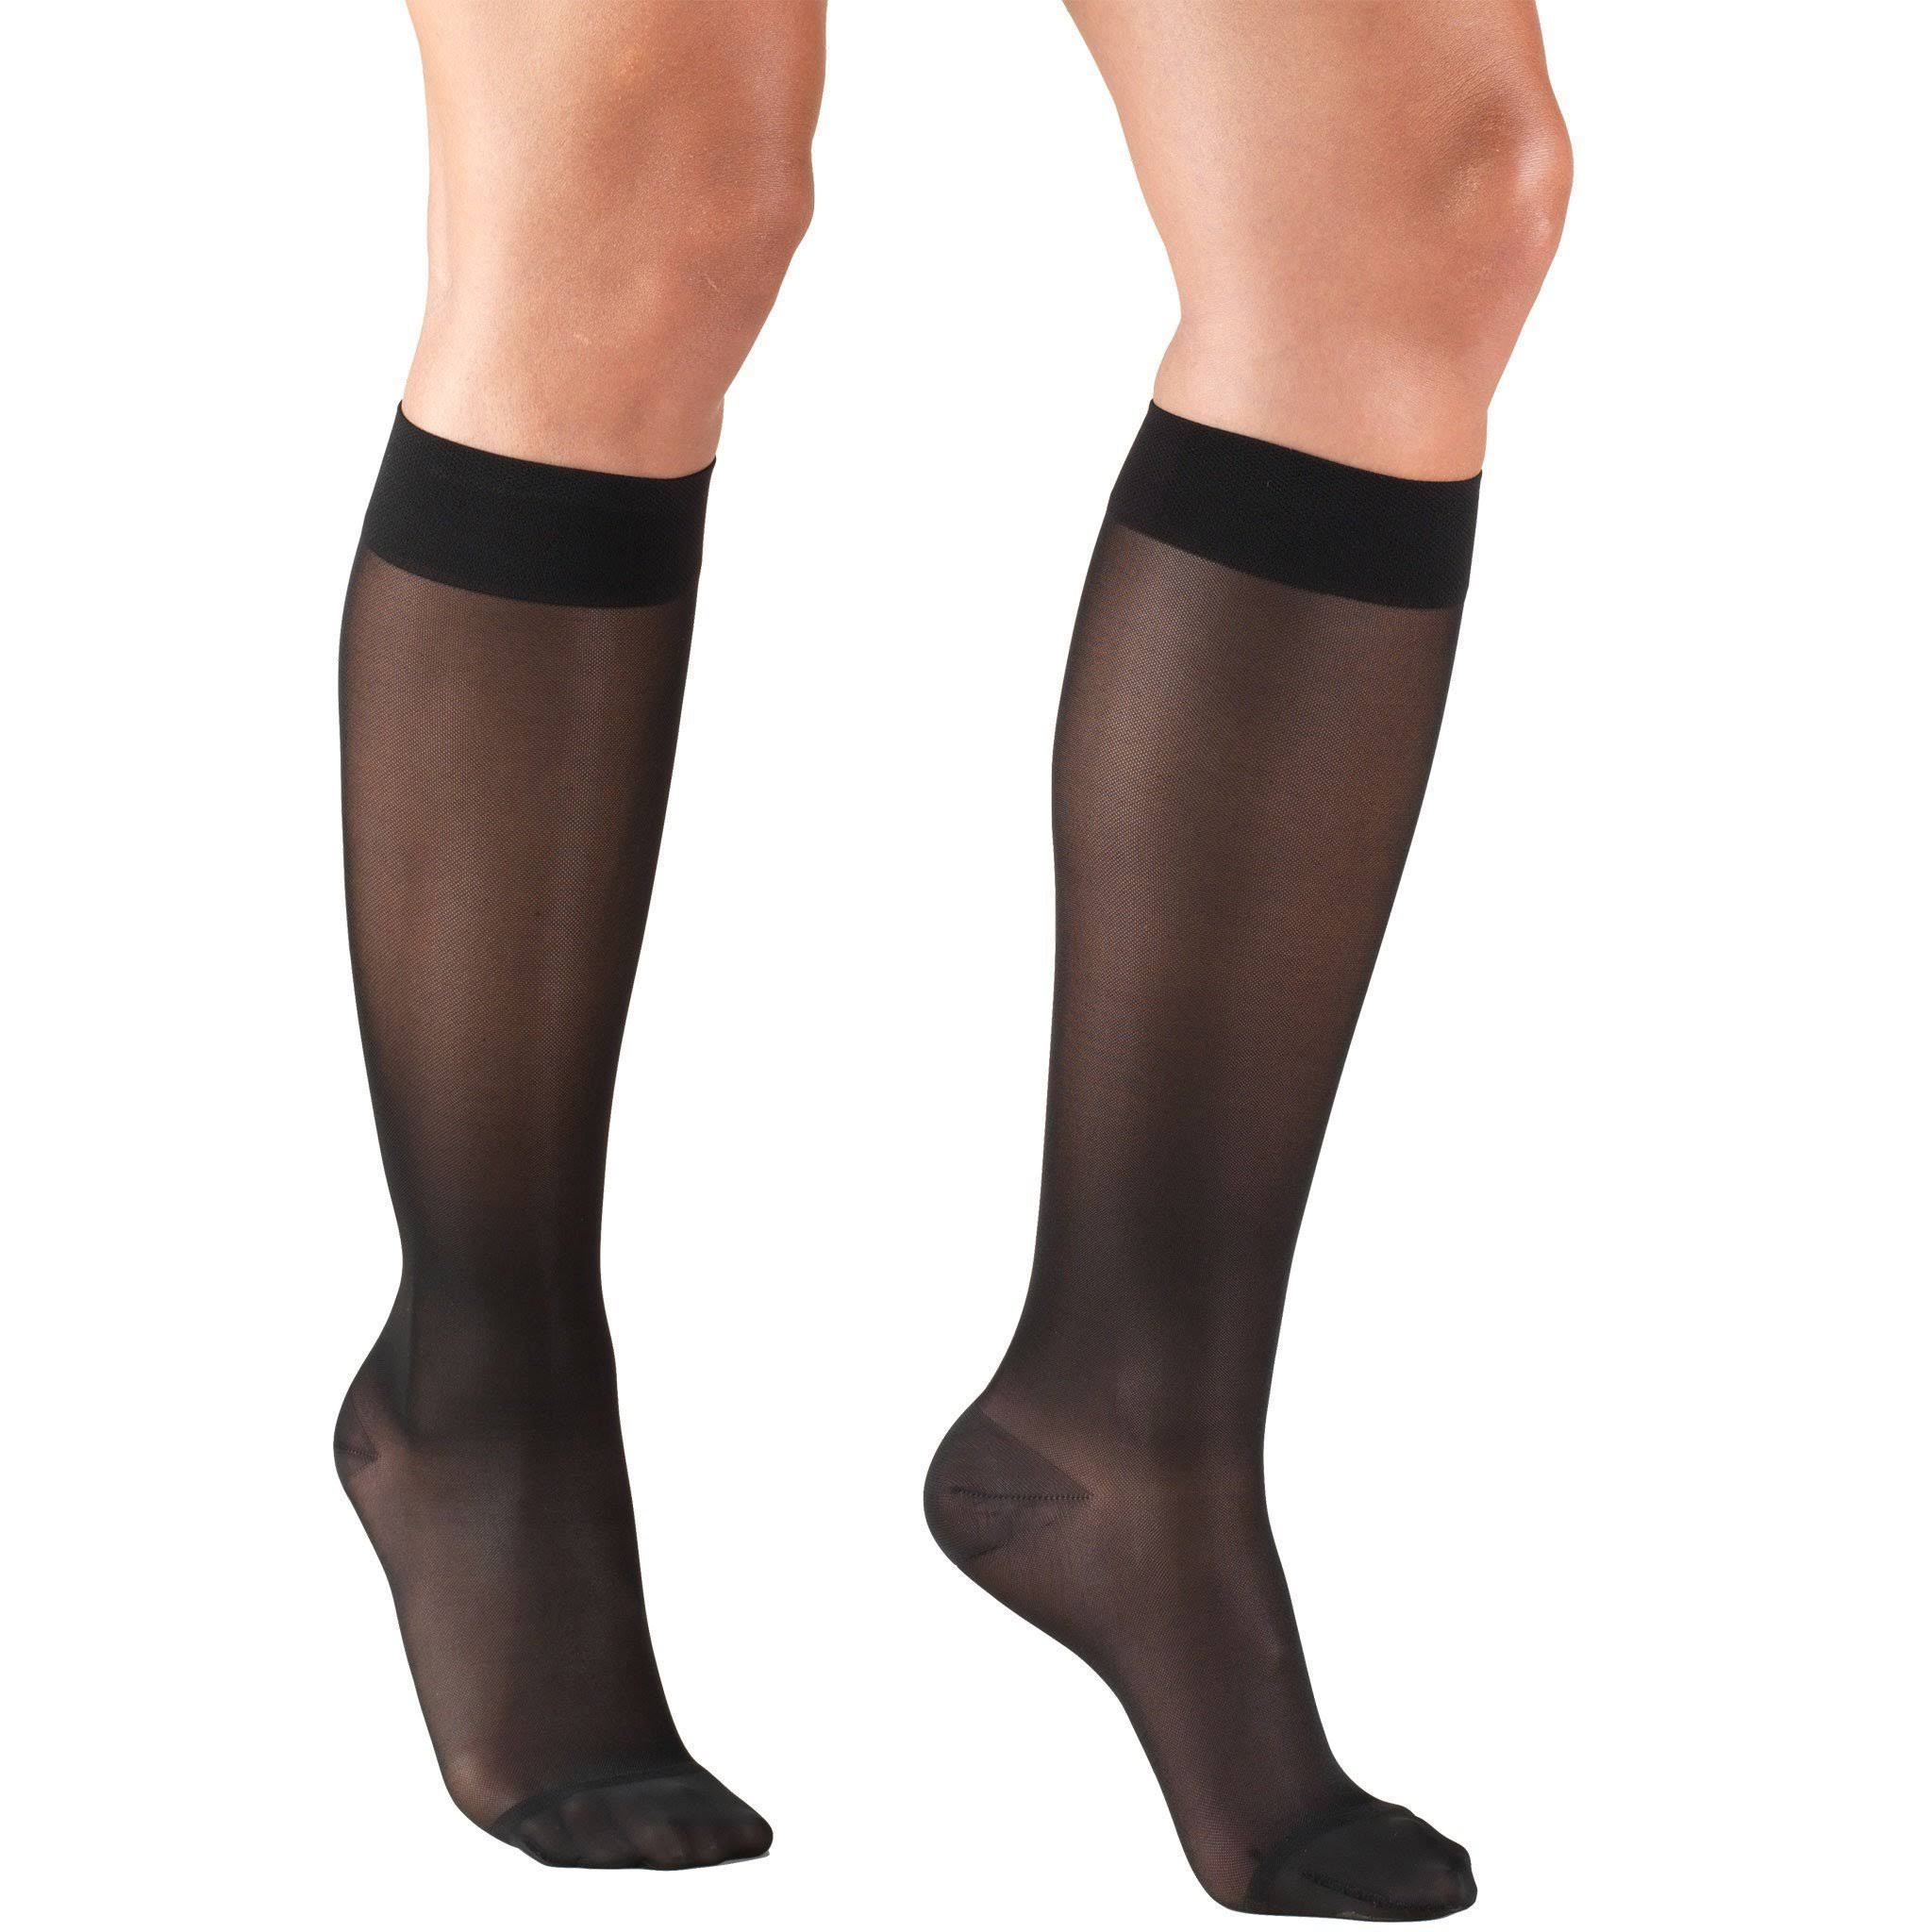 Truform Lites Knee High Compression Support Stocking - Black, Medium,15-20mmHg